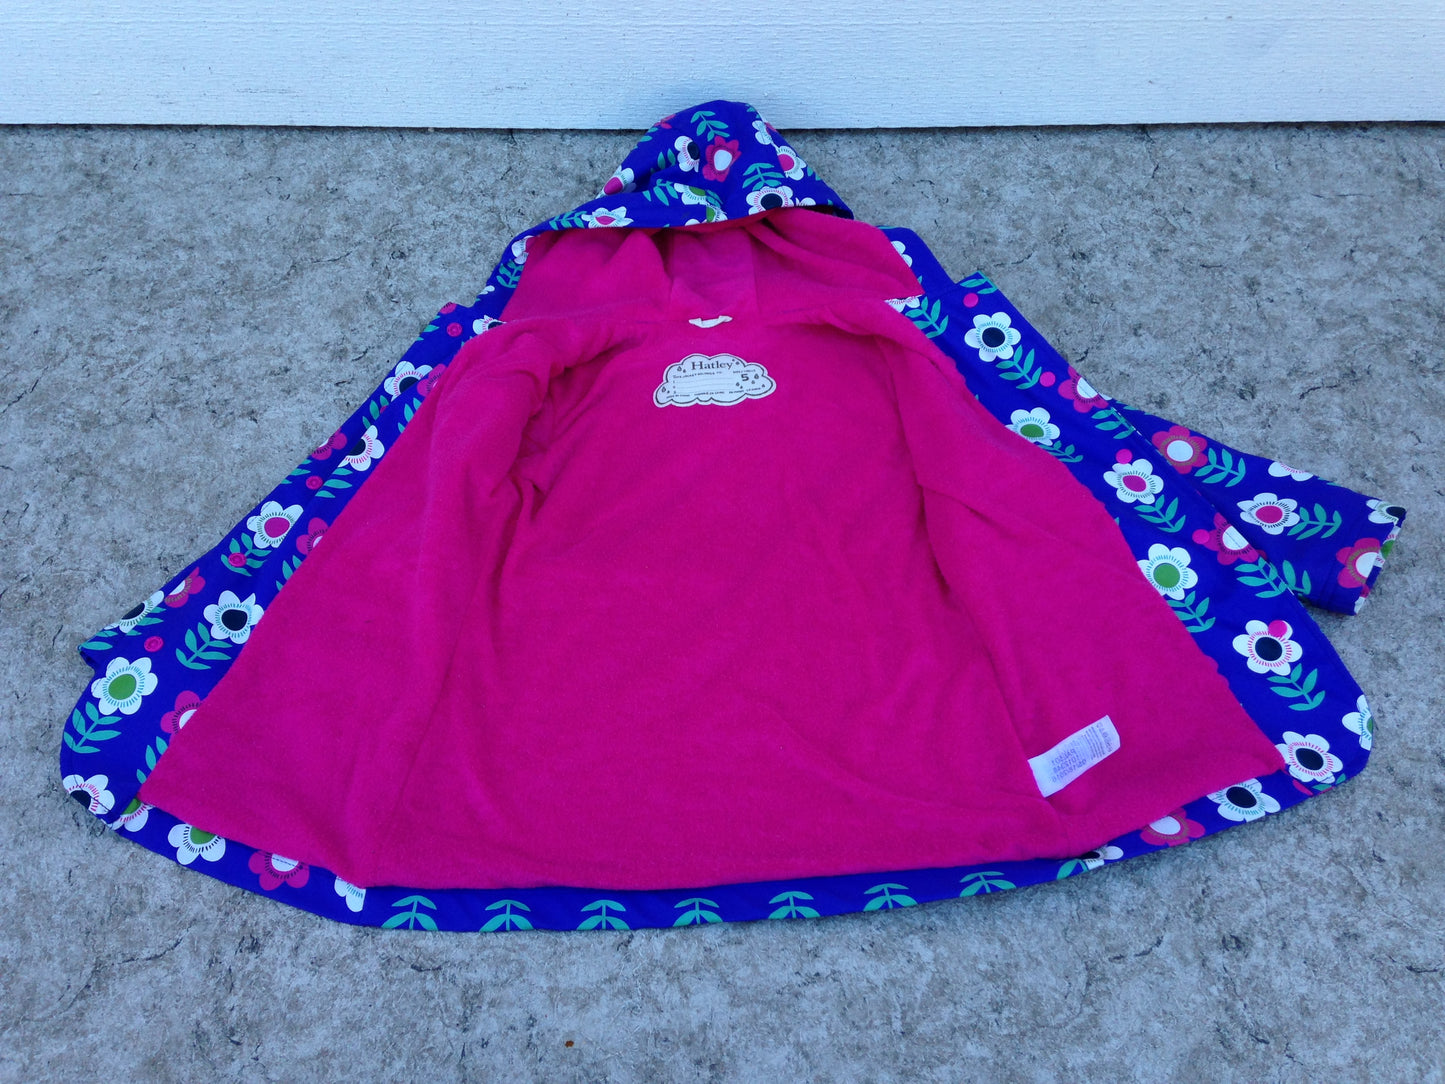 Rain Coat Child Size 5 Hatley Purple Pink Daisy Waterproof Excellent